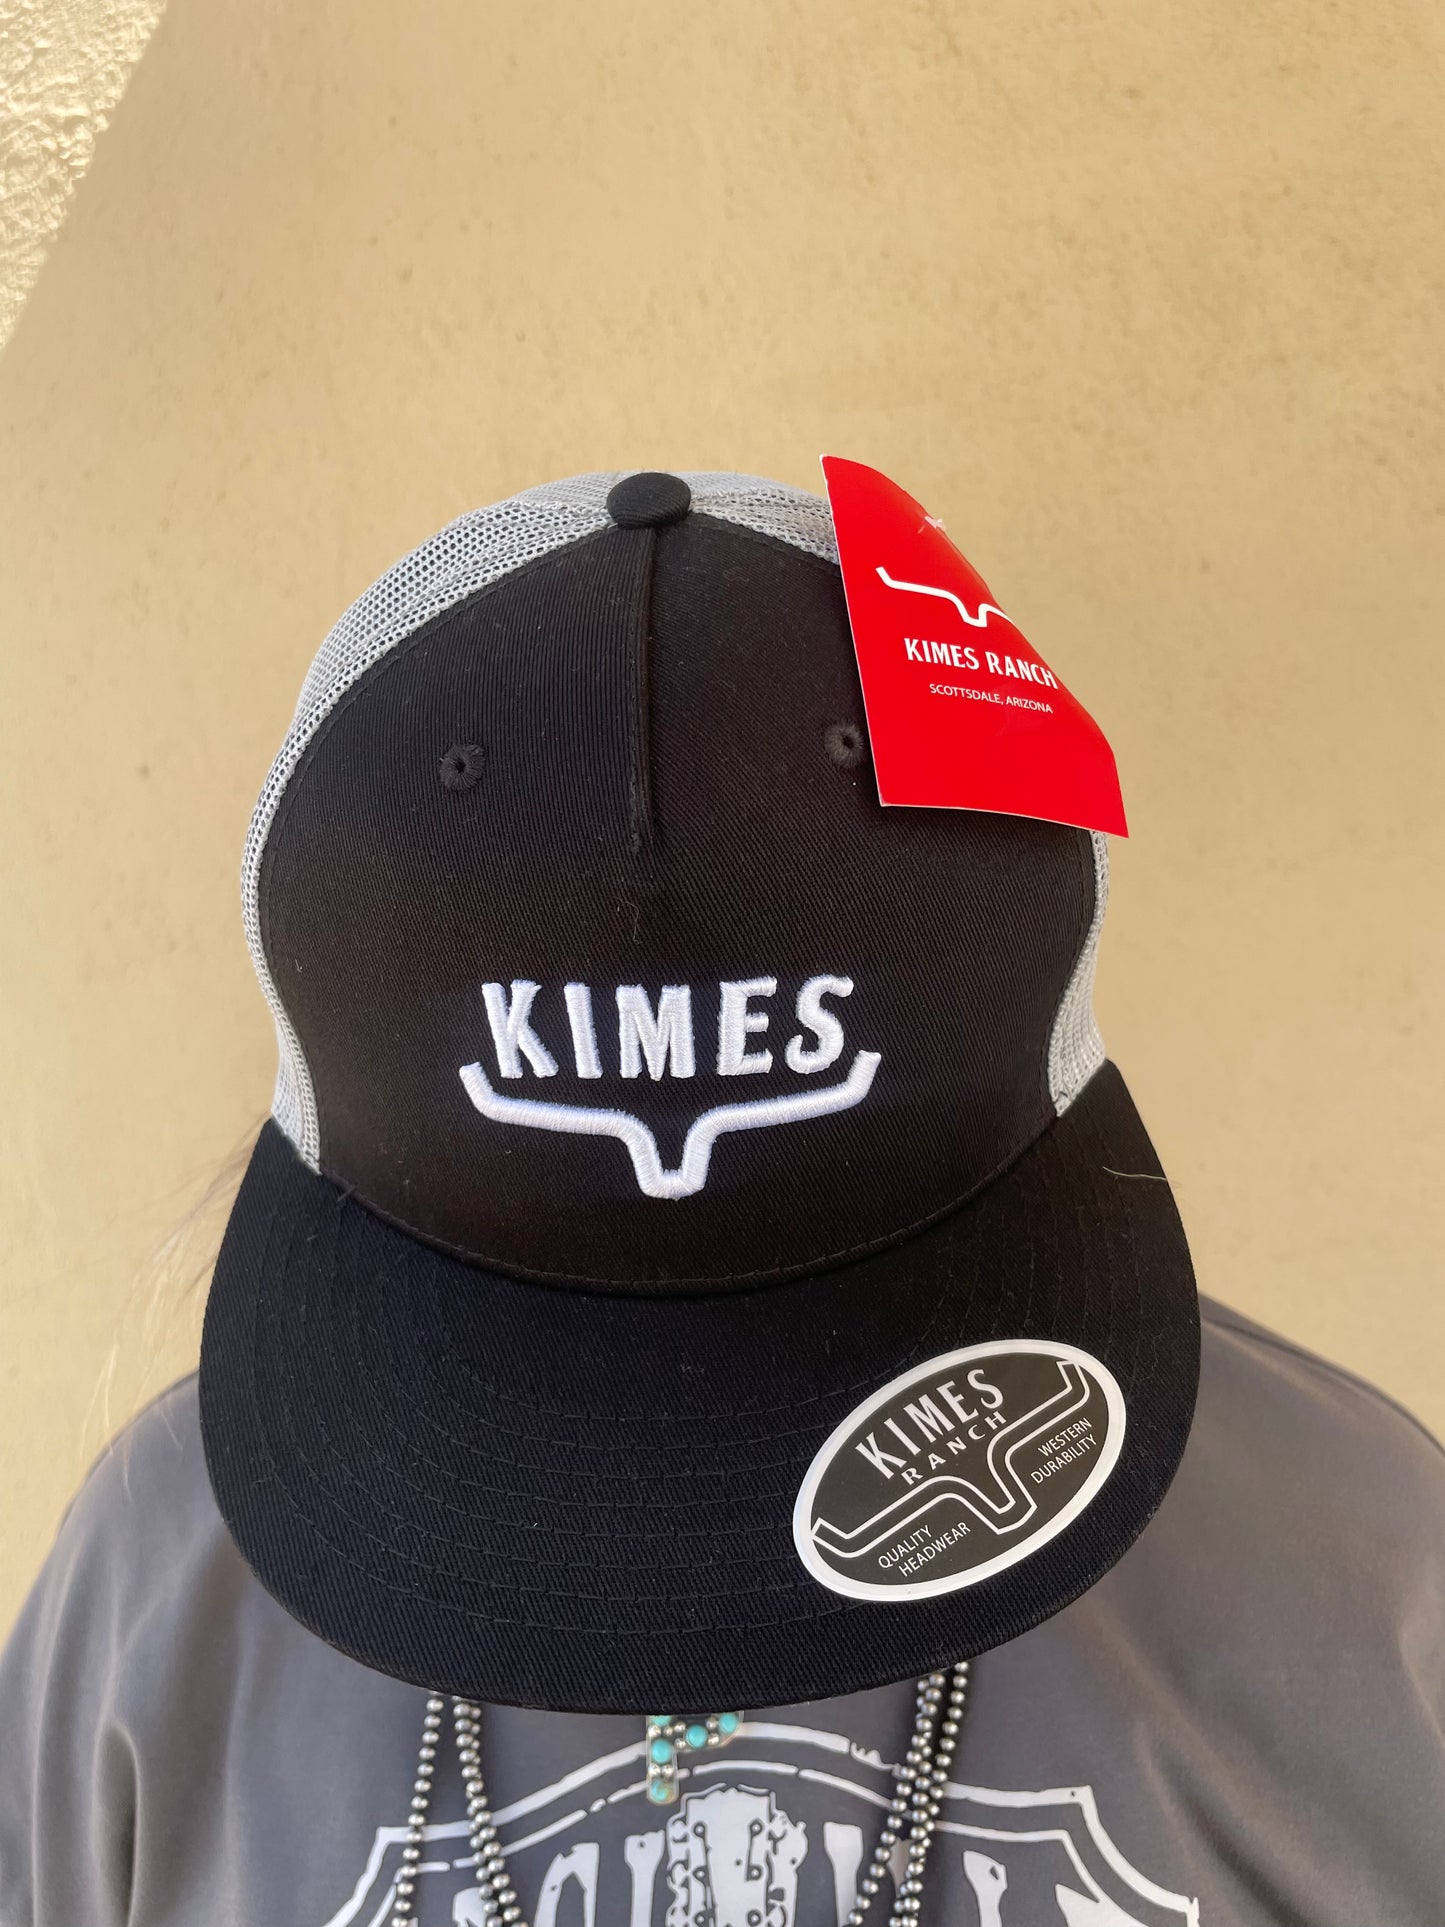 The Kimes Huxton Trucker Cap